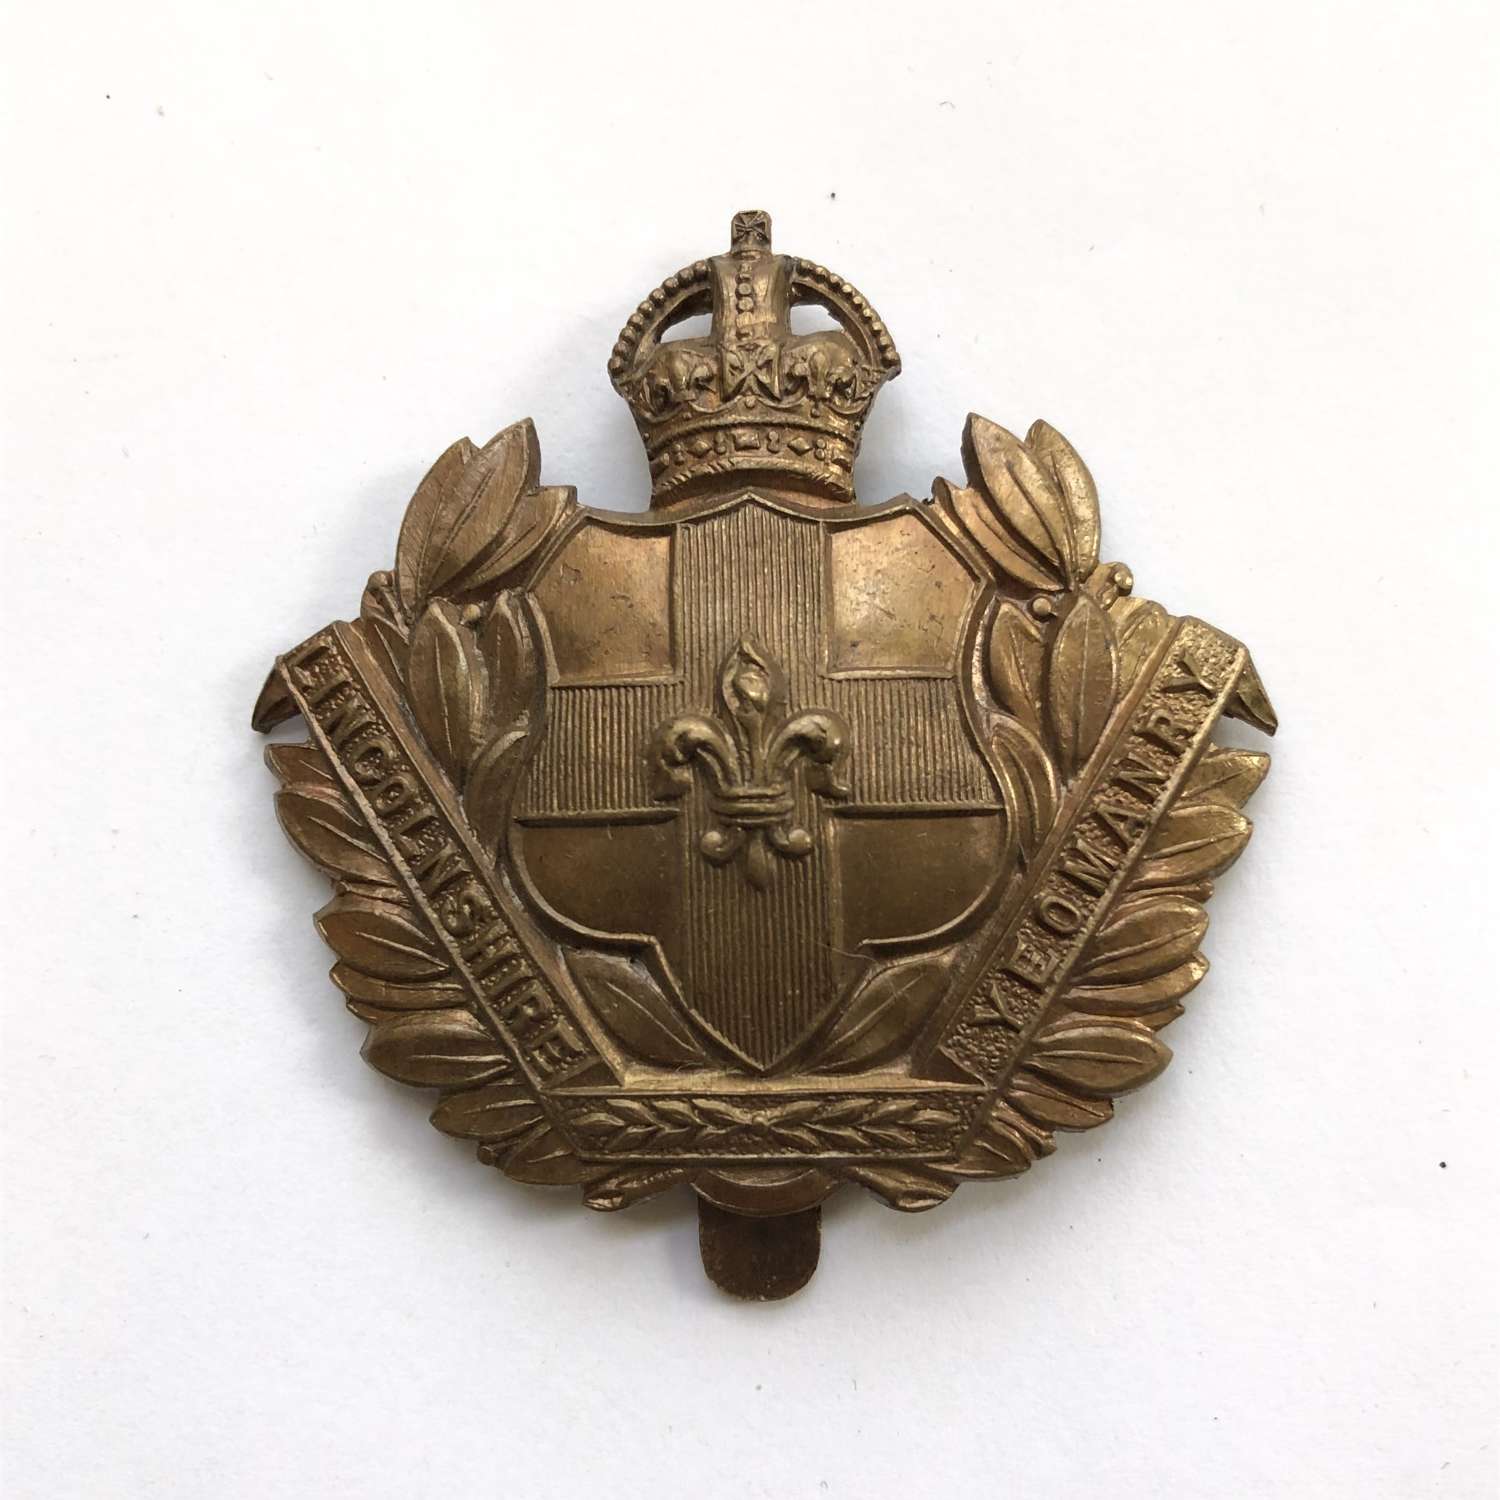 Lincolnshire Yeomanry cap badge circa 1908-20